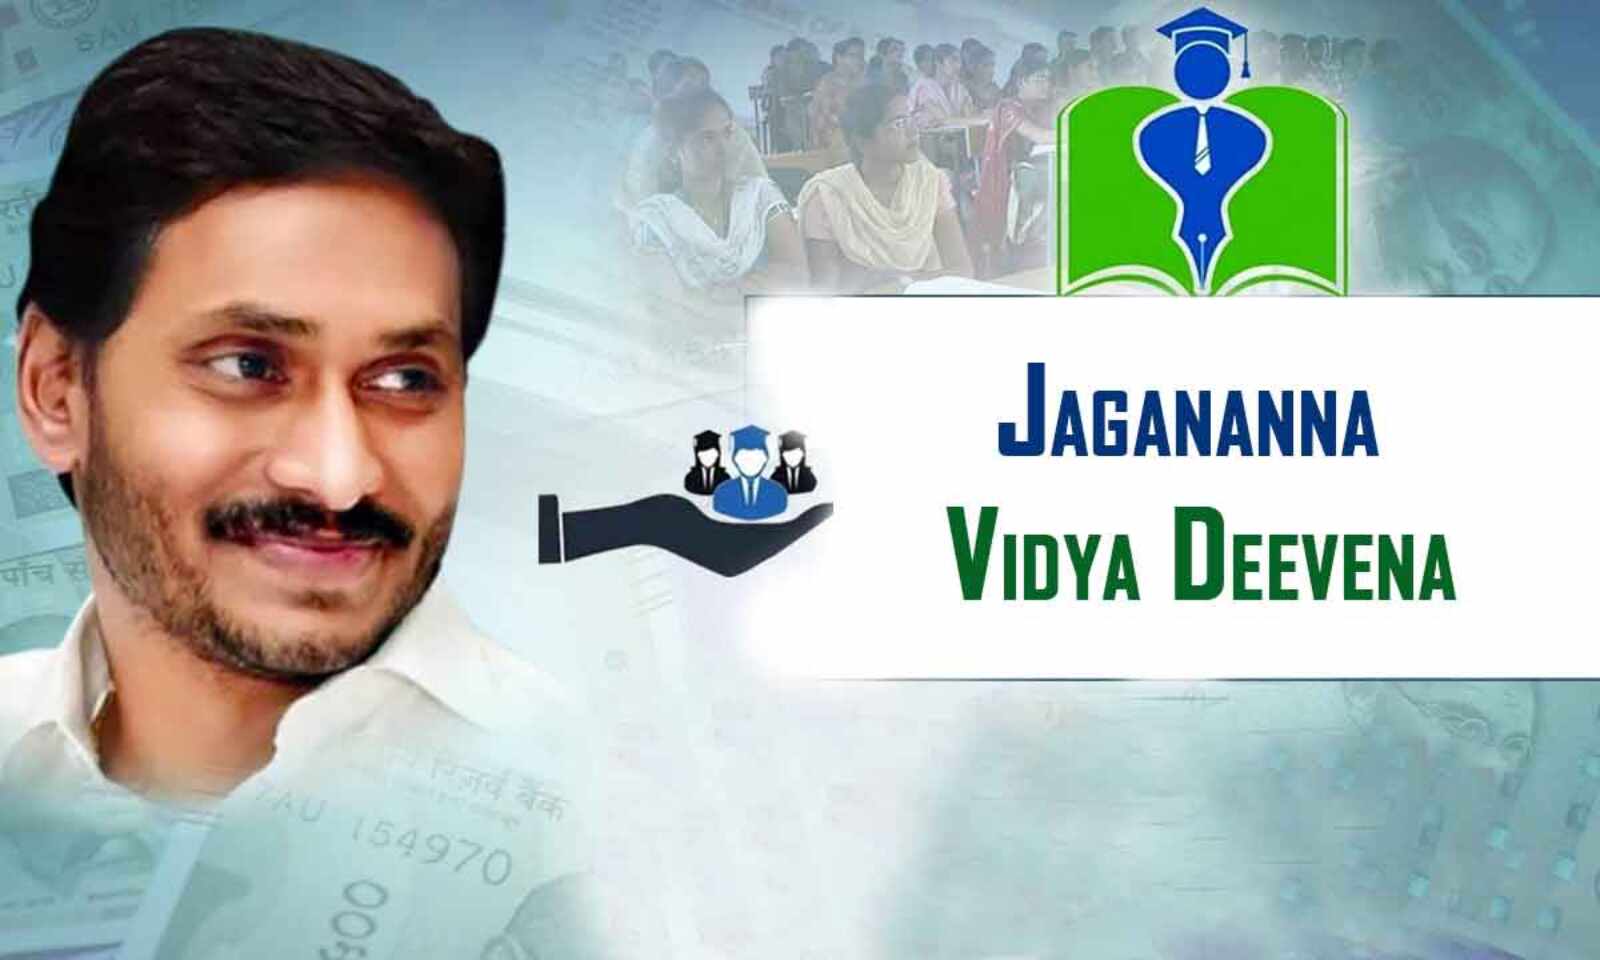 Jagananna Vidya Deevena (JVD) Funds Released check payment status online